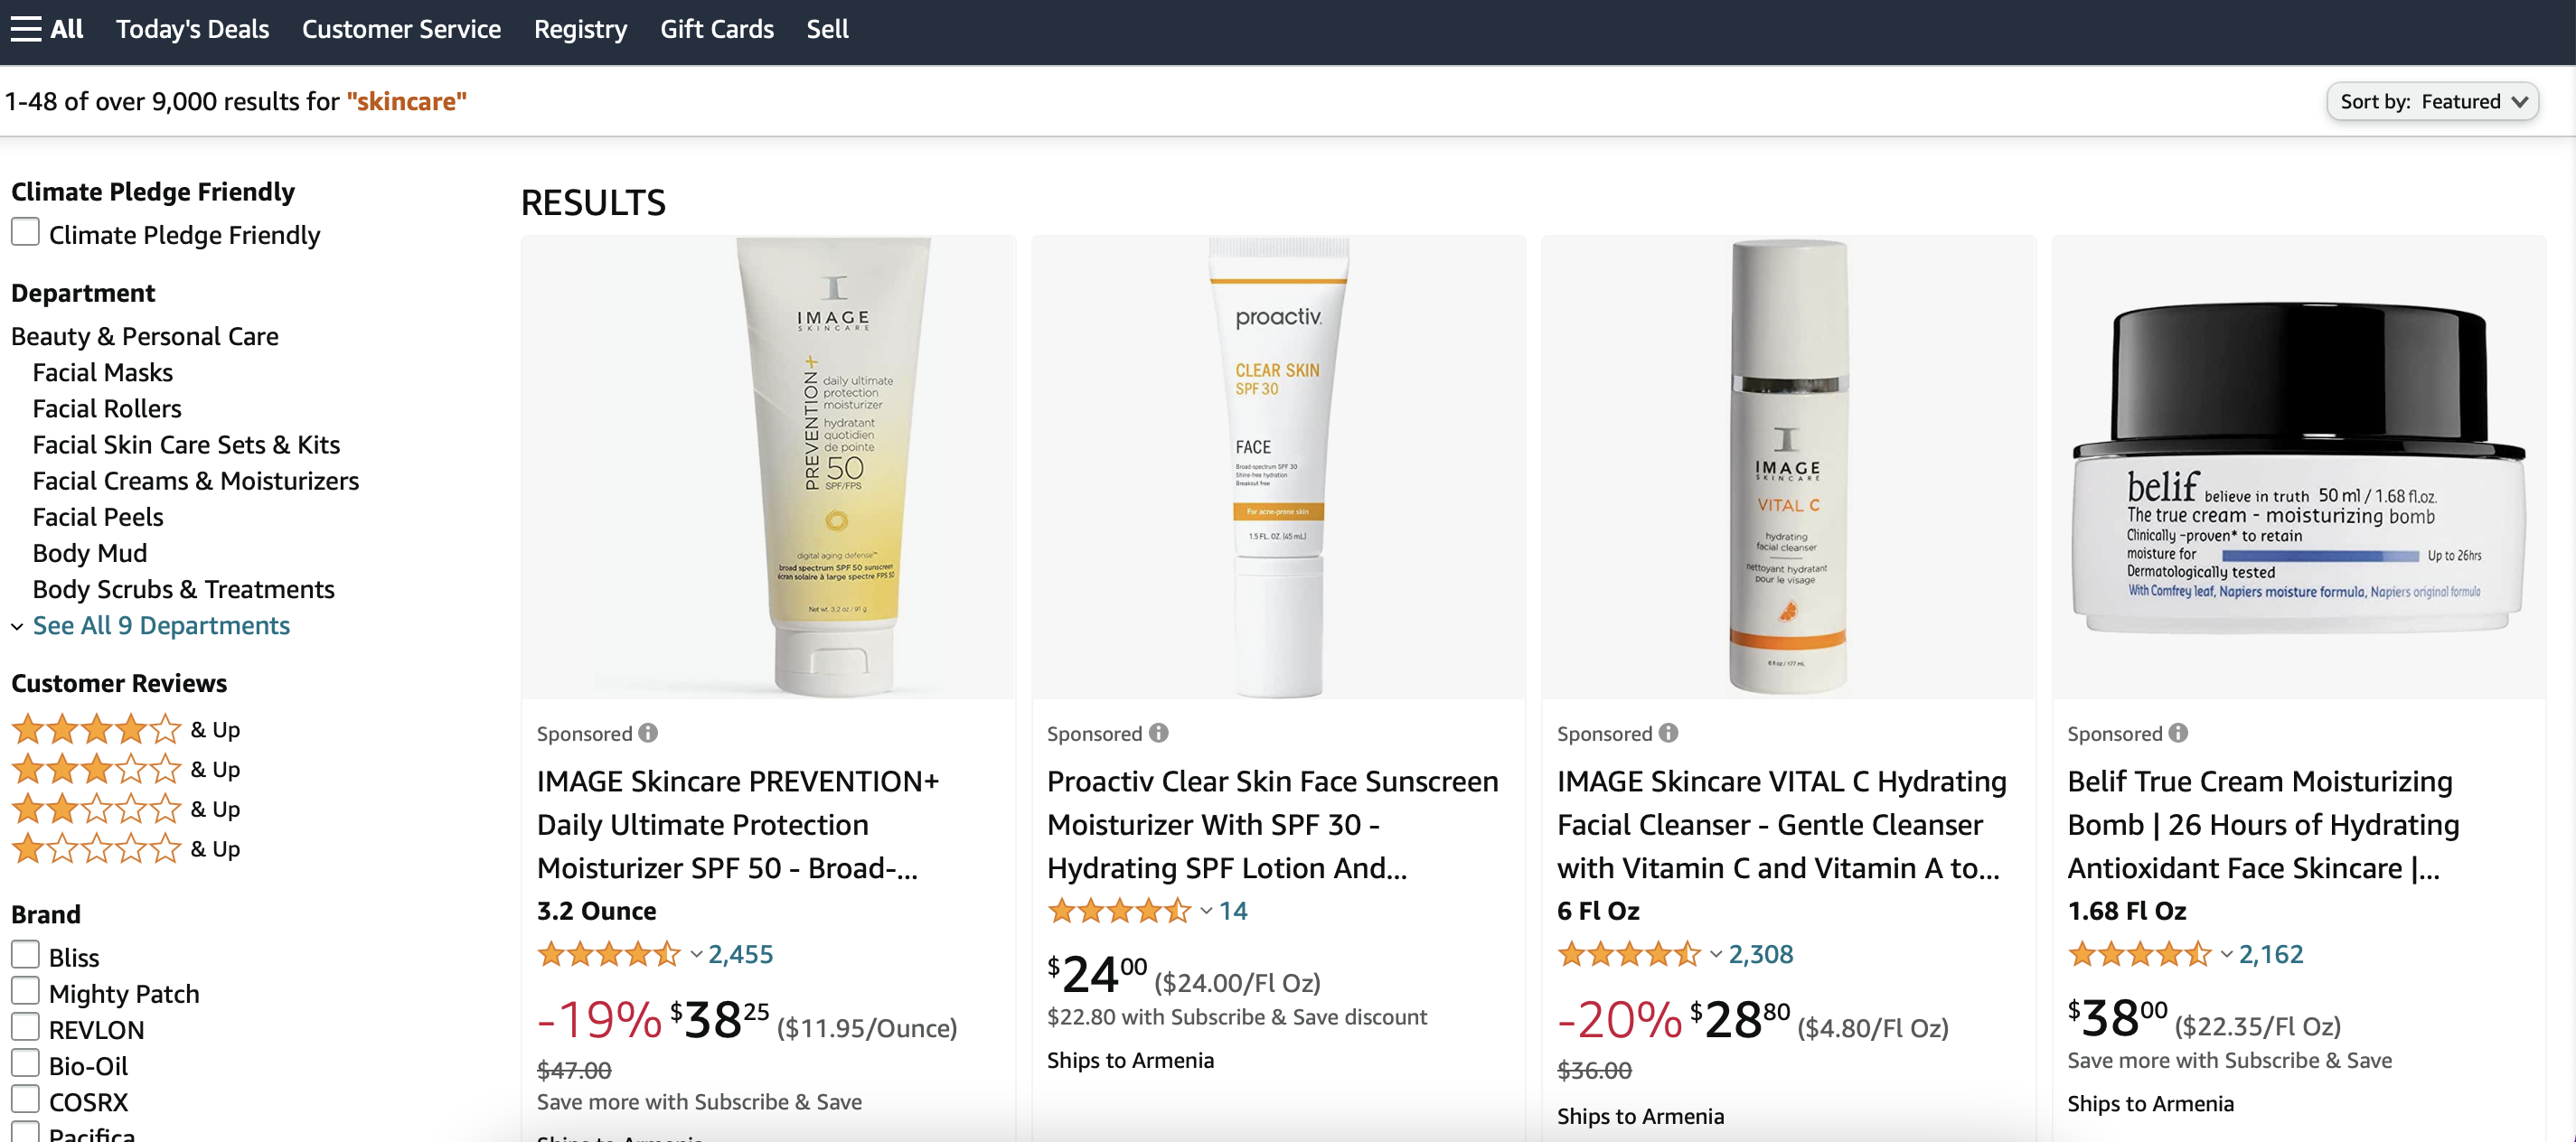 Amazon startup ideas: Skincare products